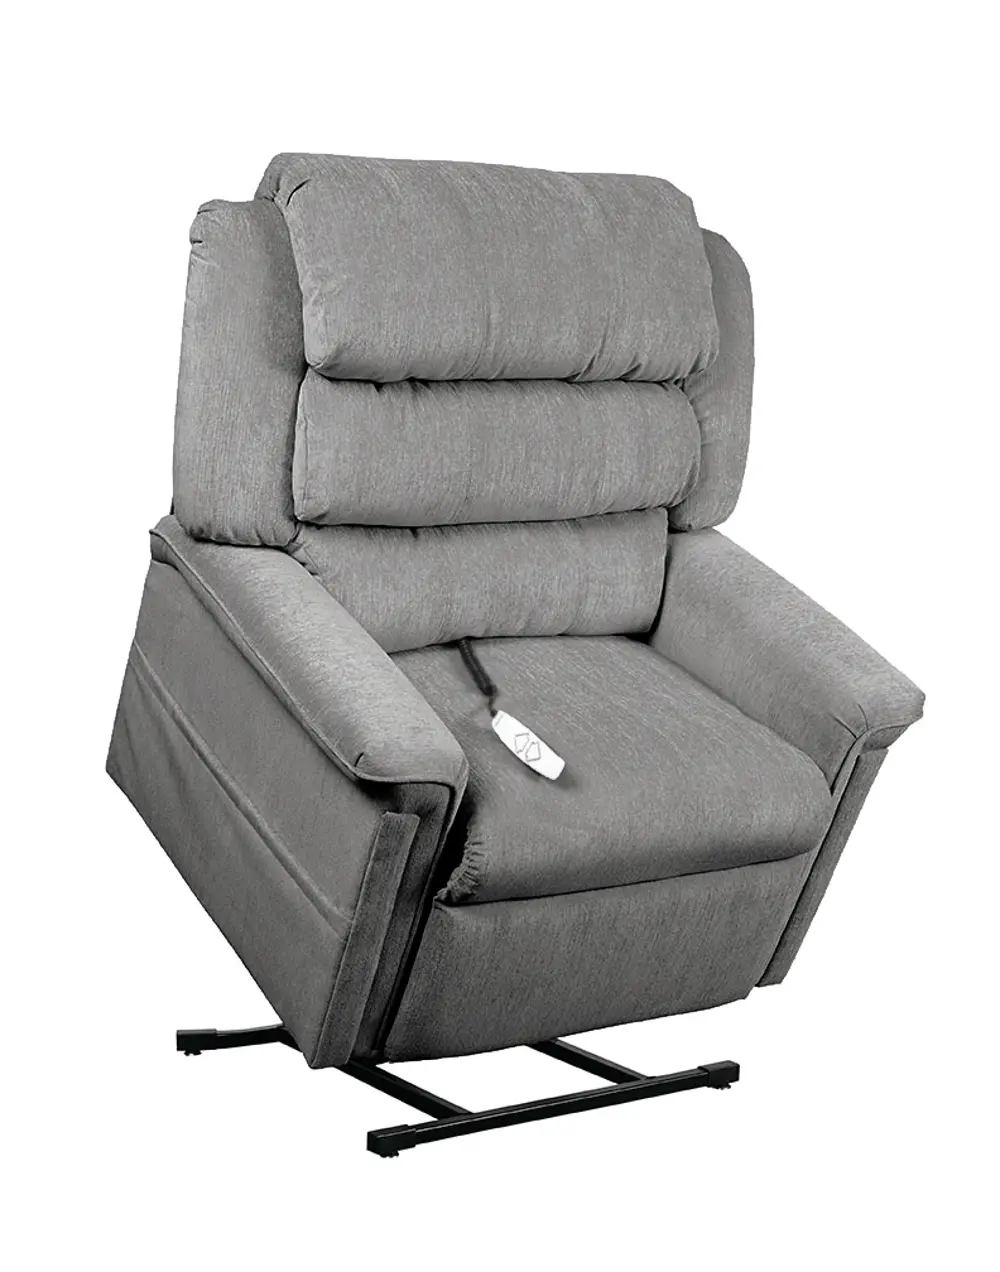 Slate Gray Reclining Lift Chair-1